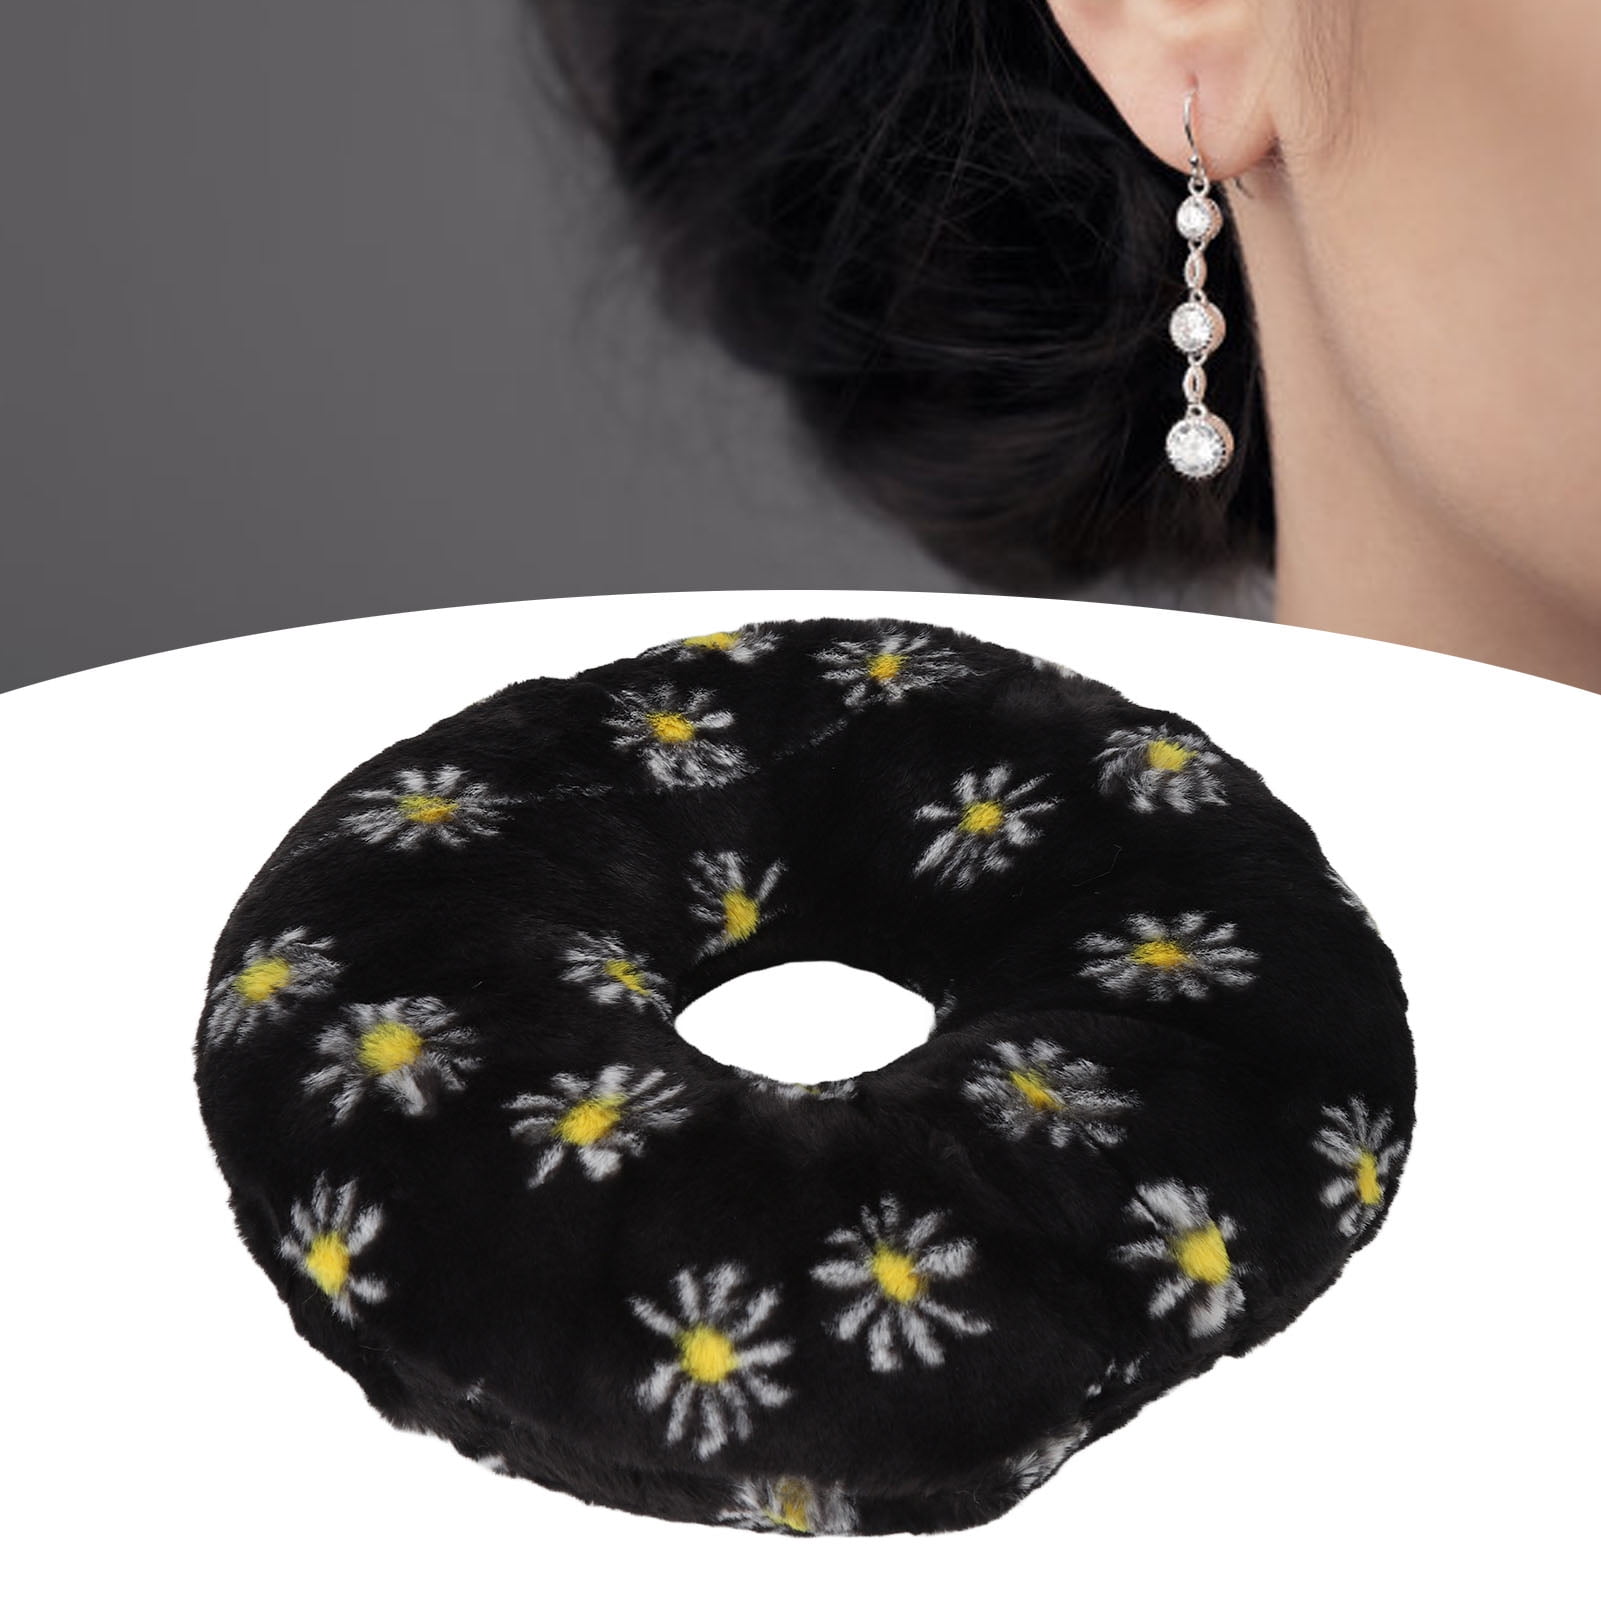 Piercings Donut Hole Pillow Side Sleeping Ear Pain Relief Soft